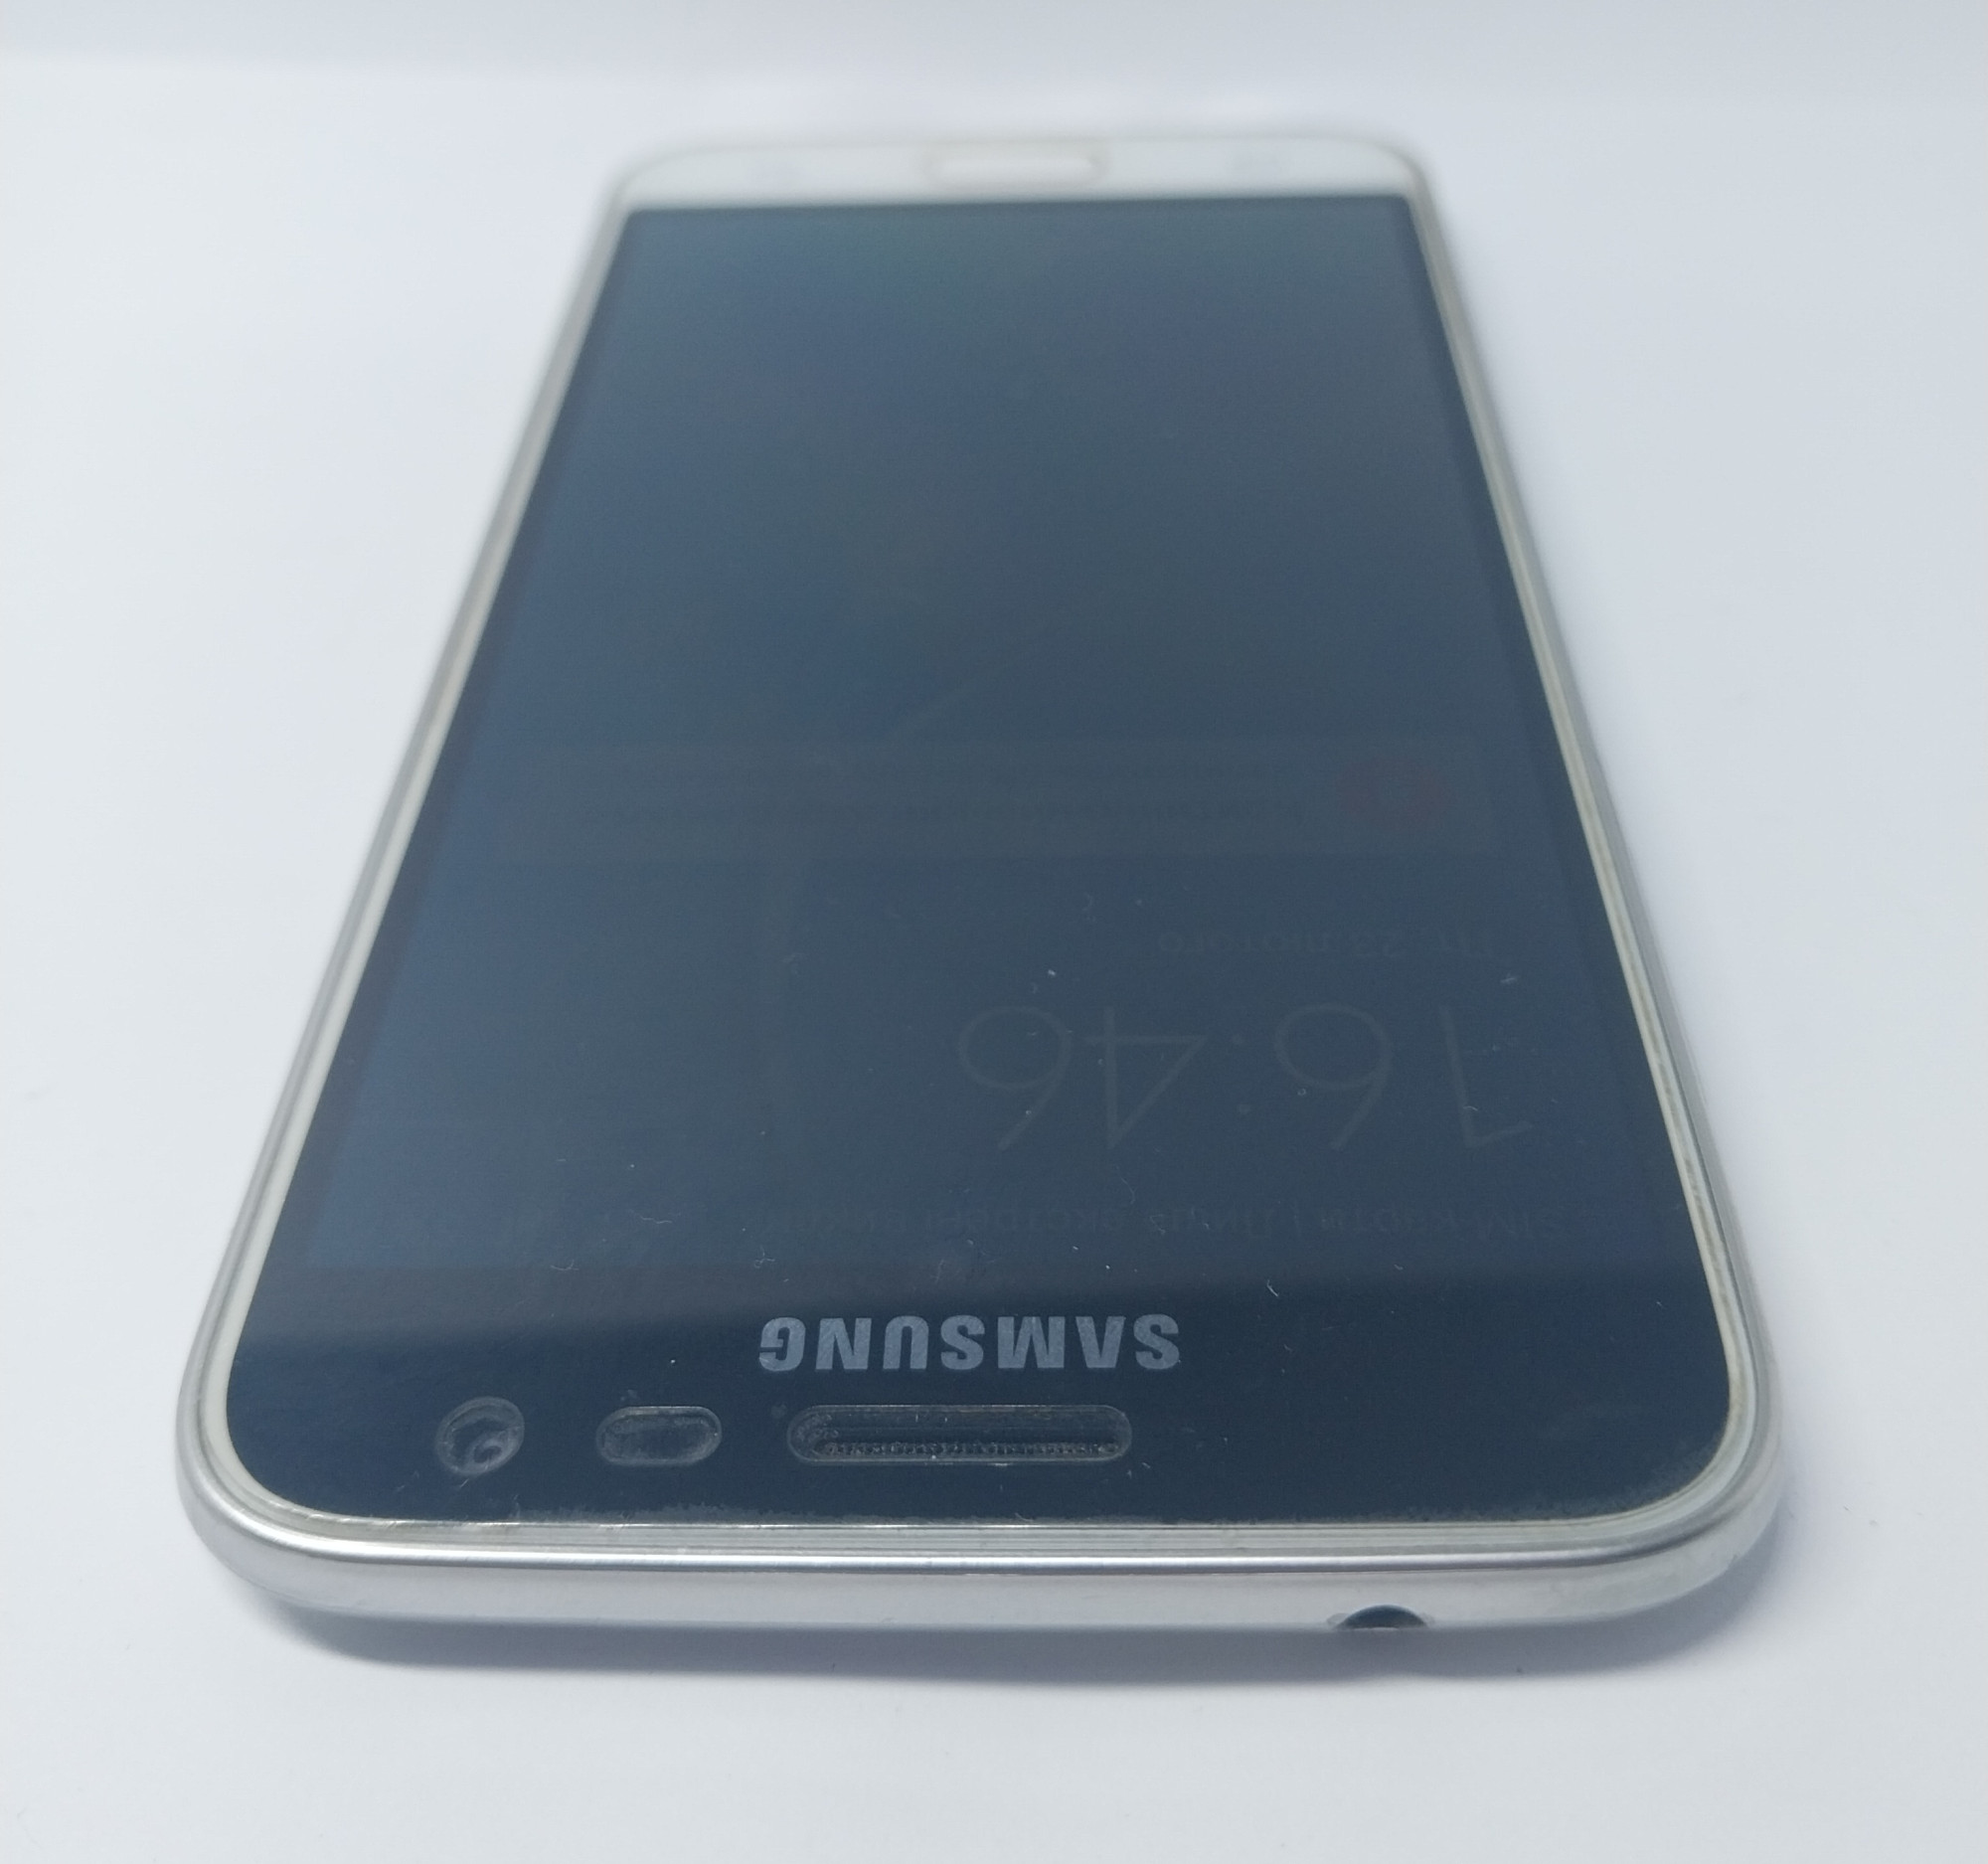 Samsung Galaxy J3 2016 White (SM-J320HZWD) 1/8Gb 1